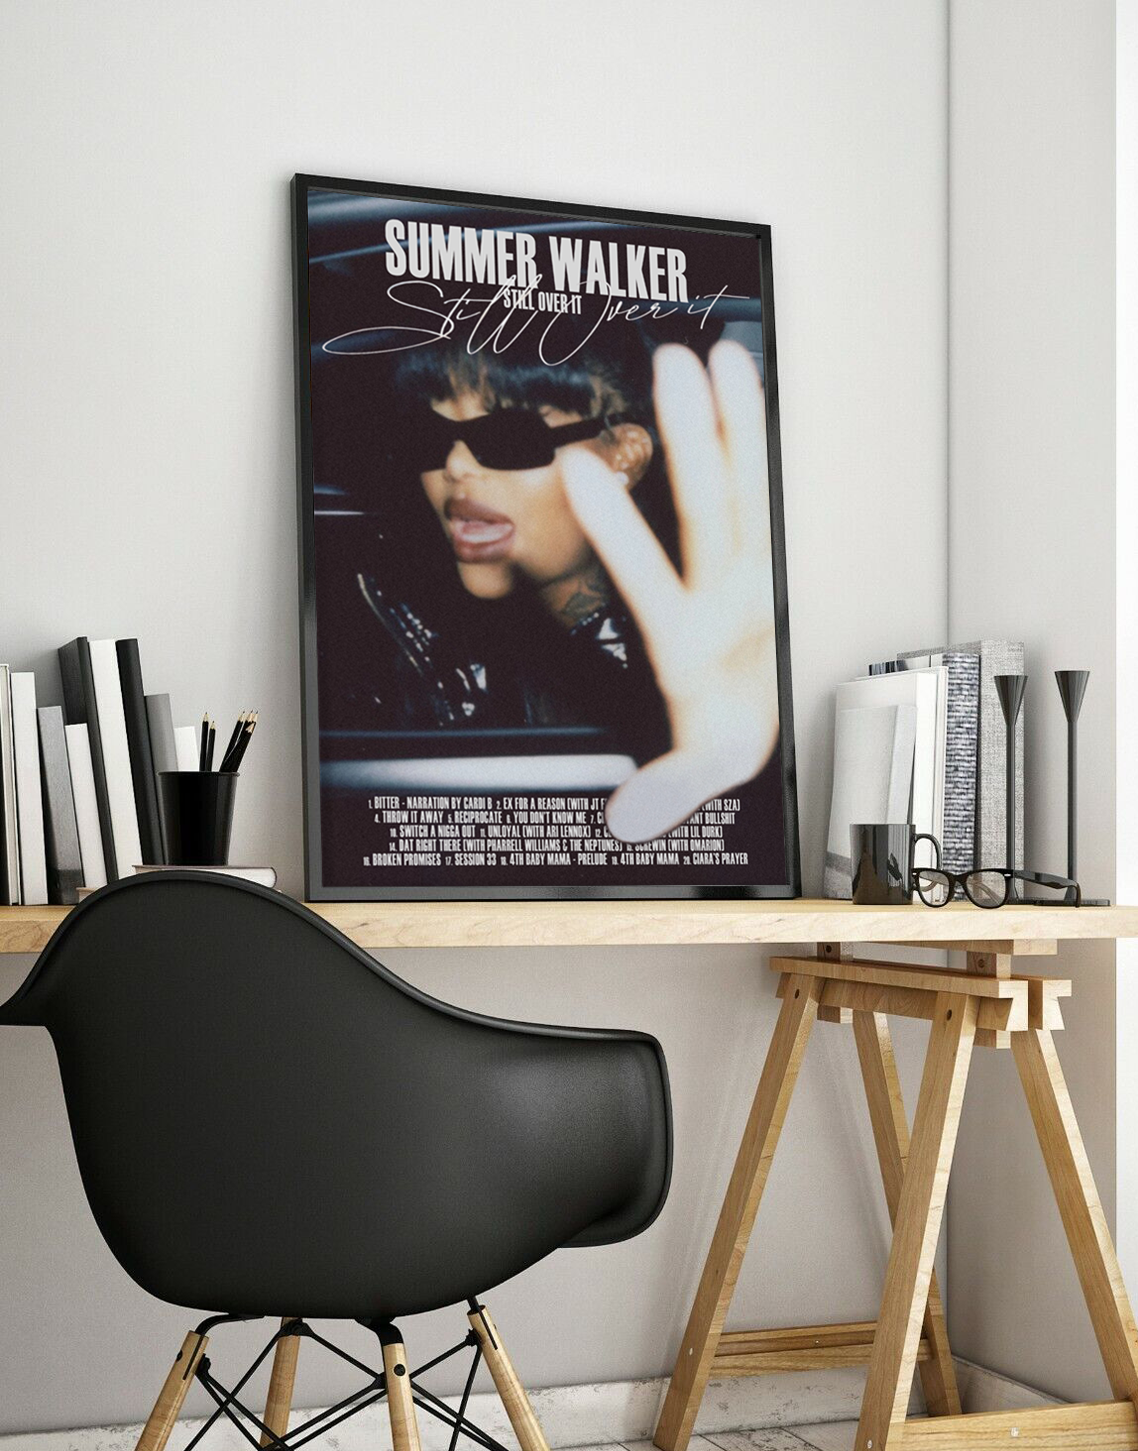 Summer Walker ‘Still Over It’ Premium Album Music Poster | Cover Artwork and Tracklist